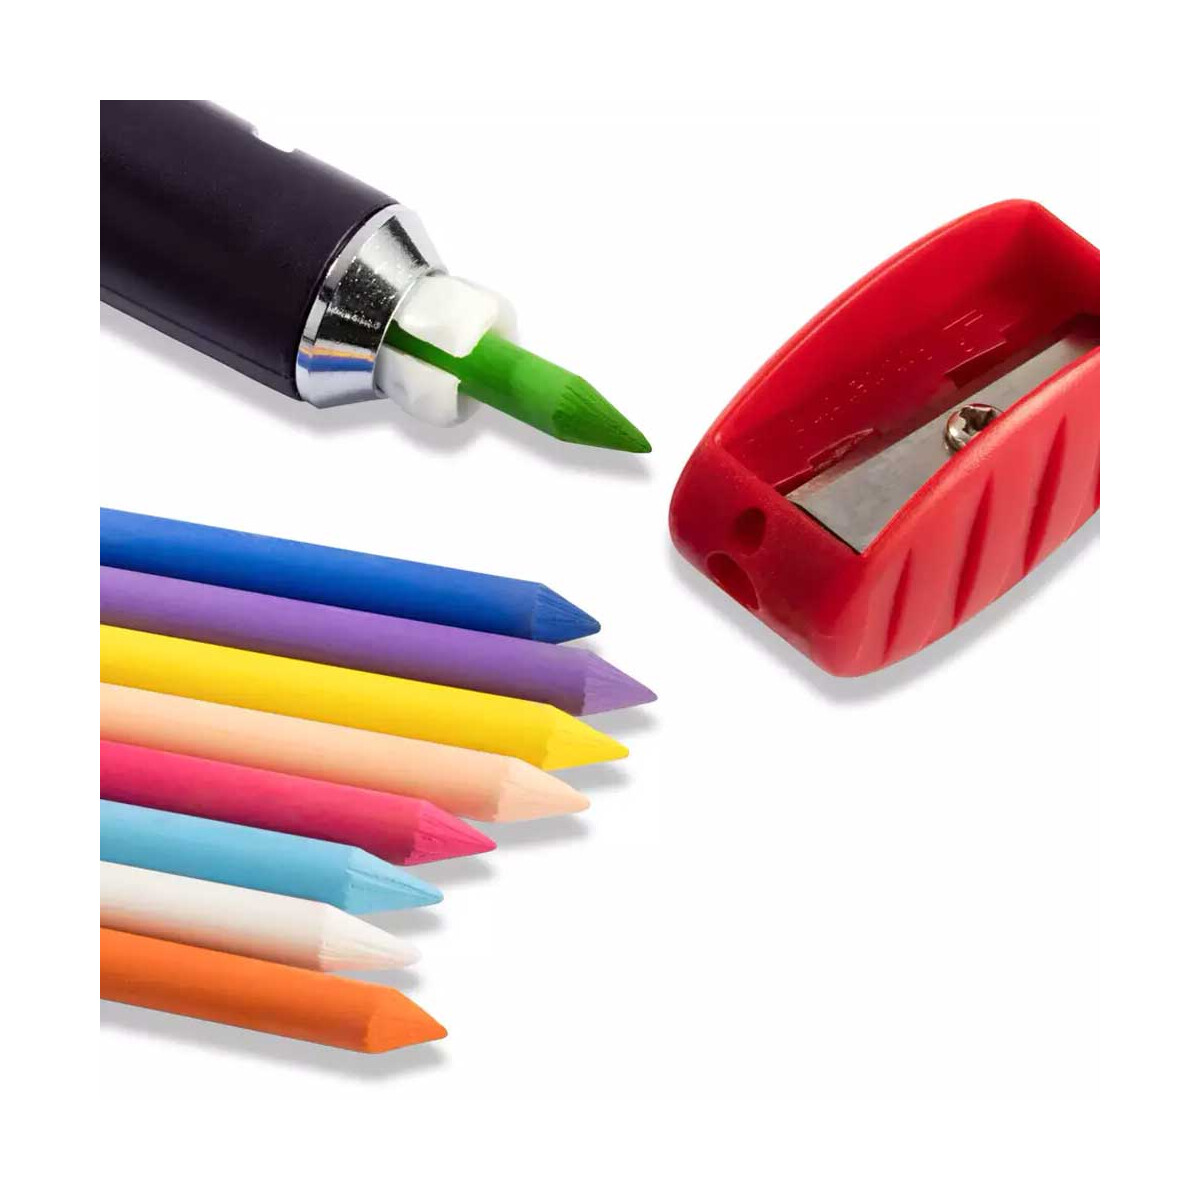 Prym Cartridge pencil set